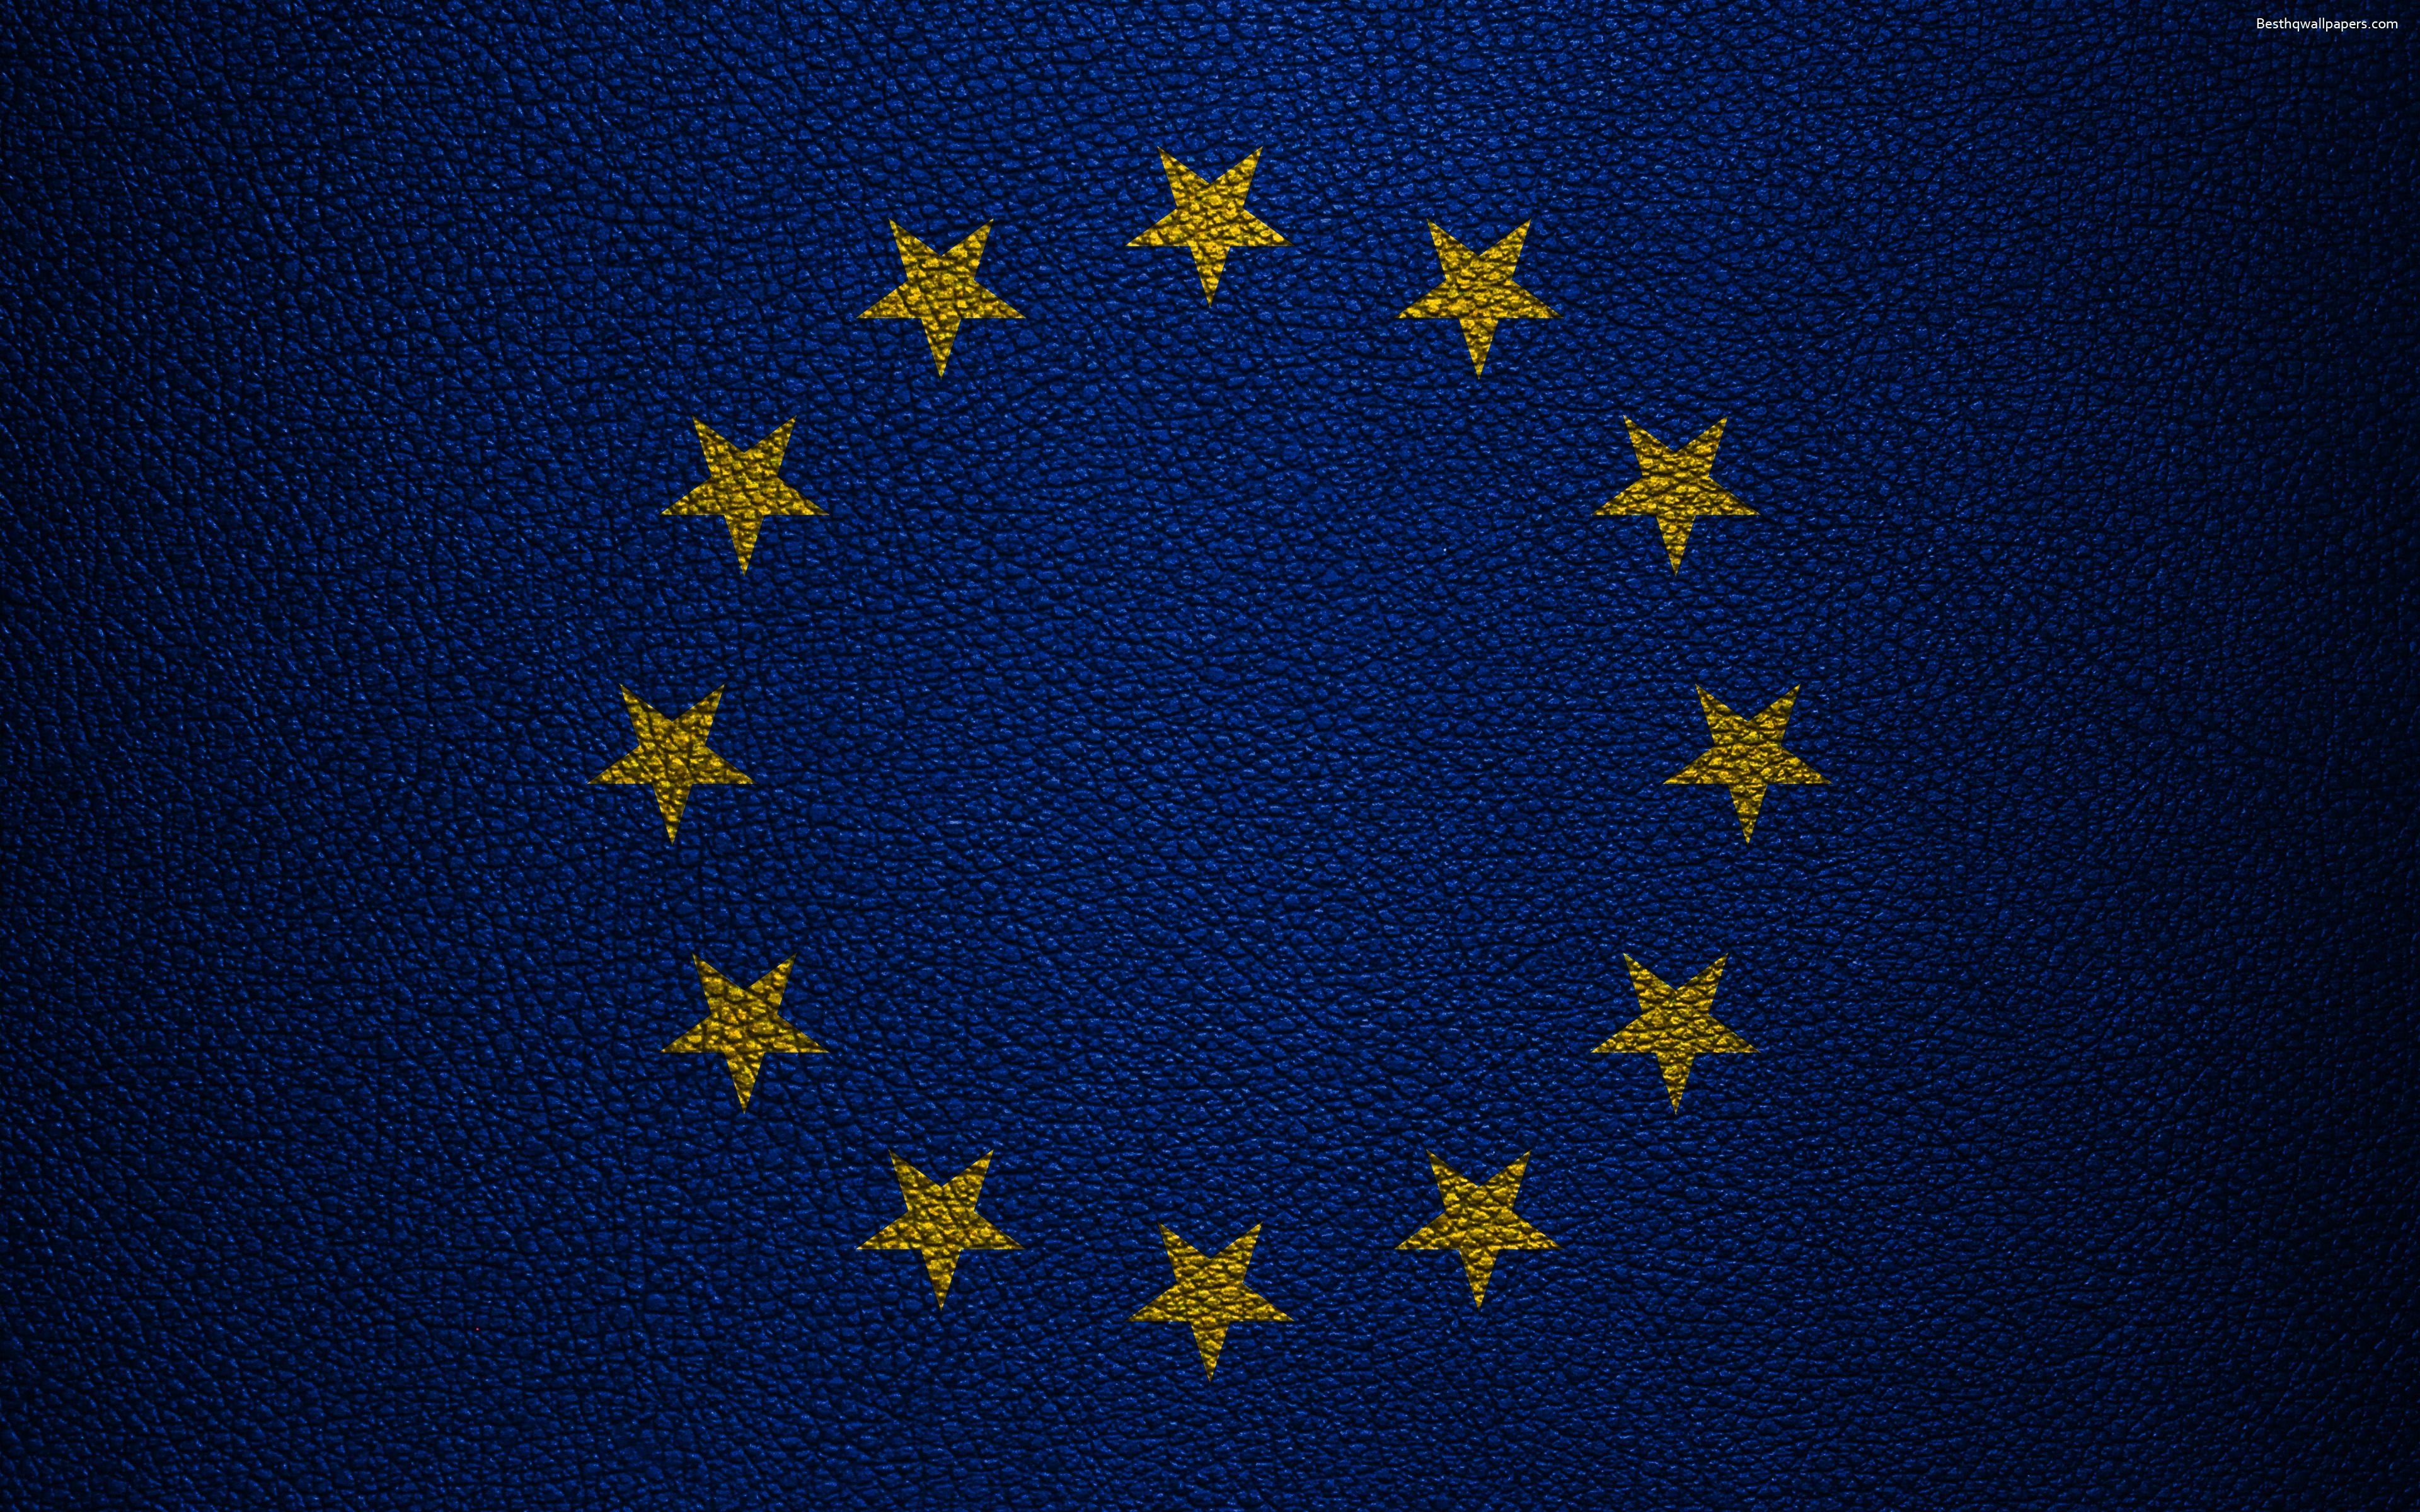 Download wallpaper European Union Flag, 4K, international organizations, leather texture, EU flag, Europe, European flags, European Union for desktop with resolution 3840x2400. High Quality HD picture wallpaper